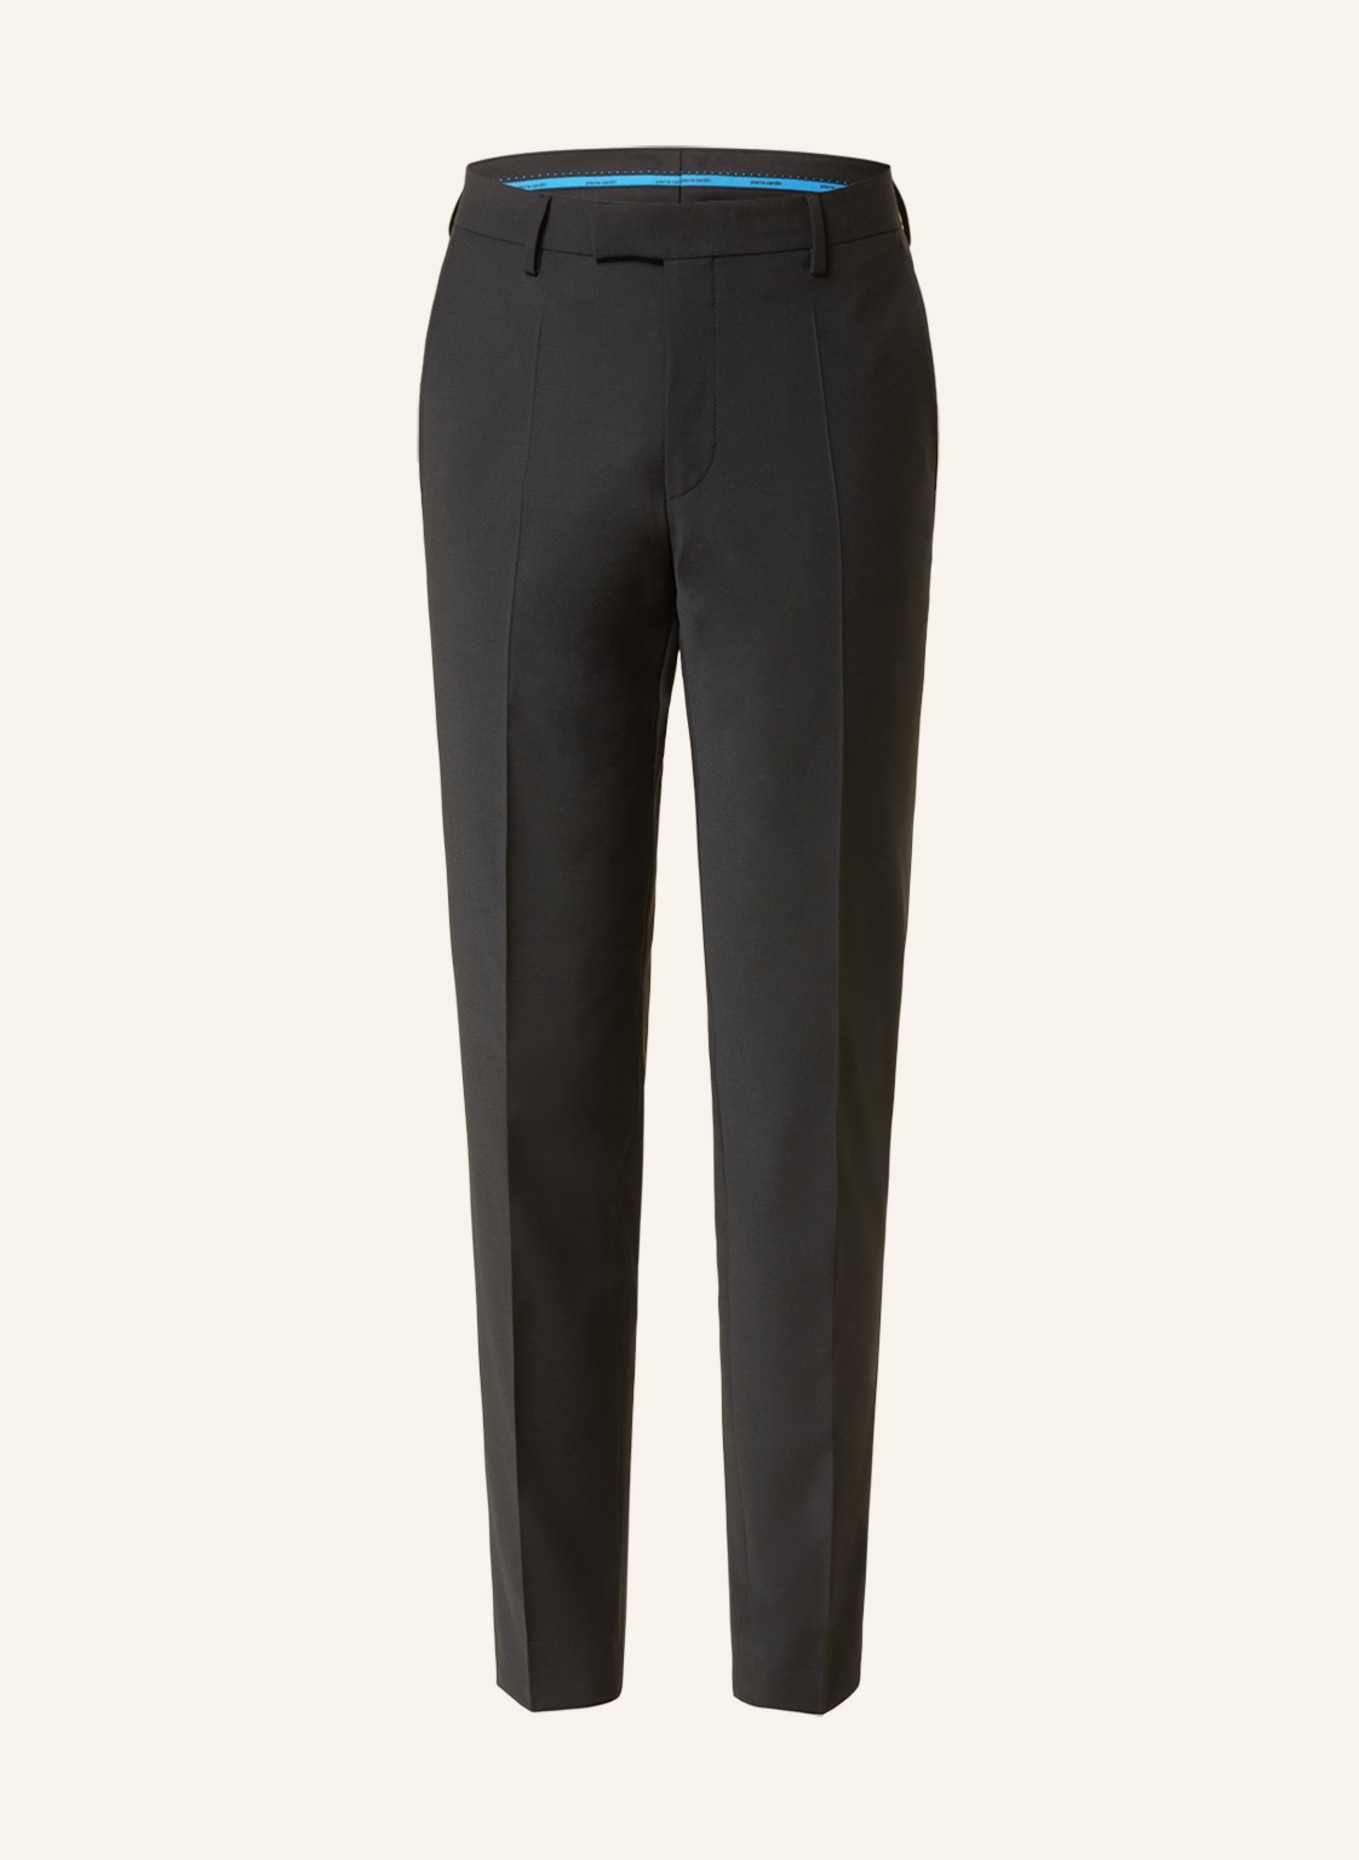 Pierre Cardin Performance Black Twill Regular Fit Suit